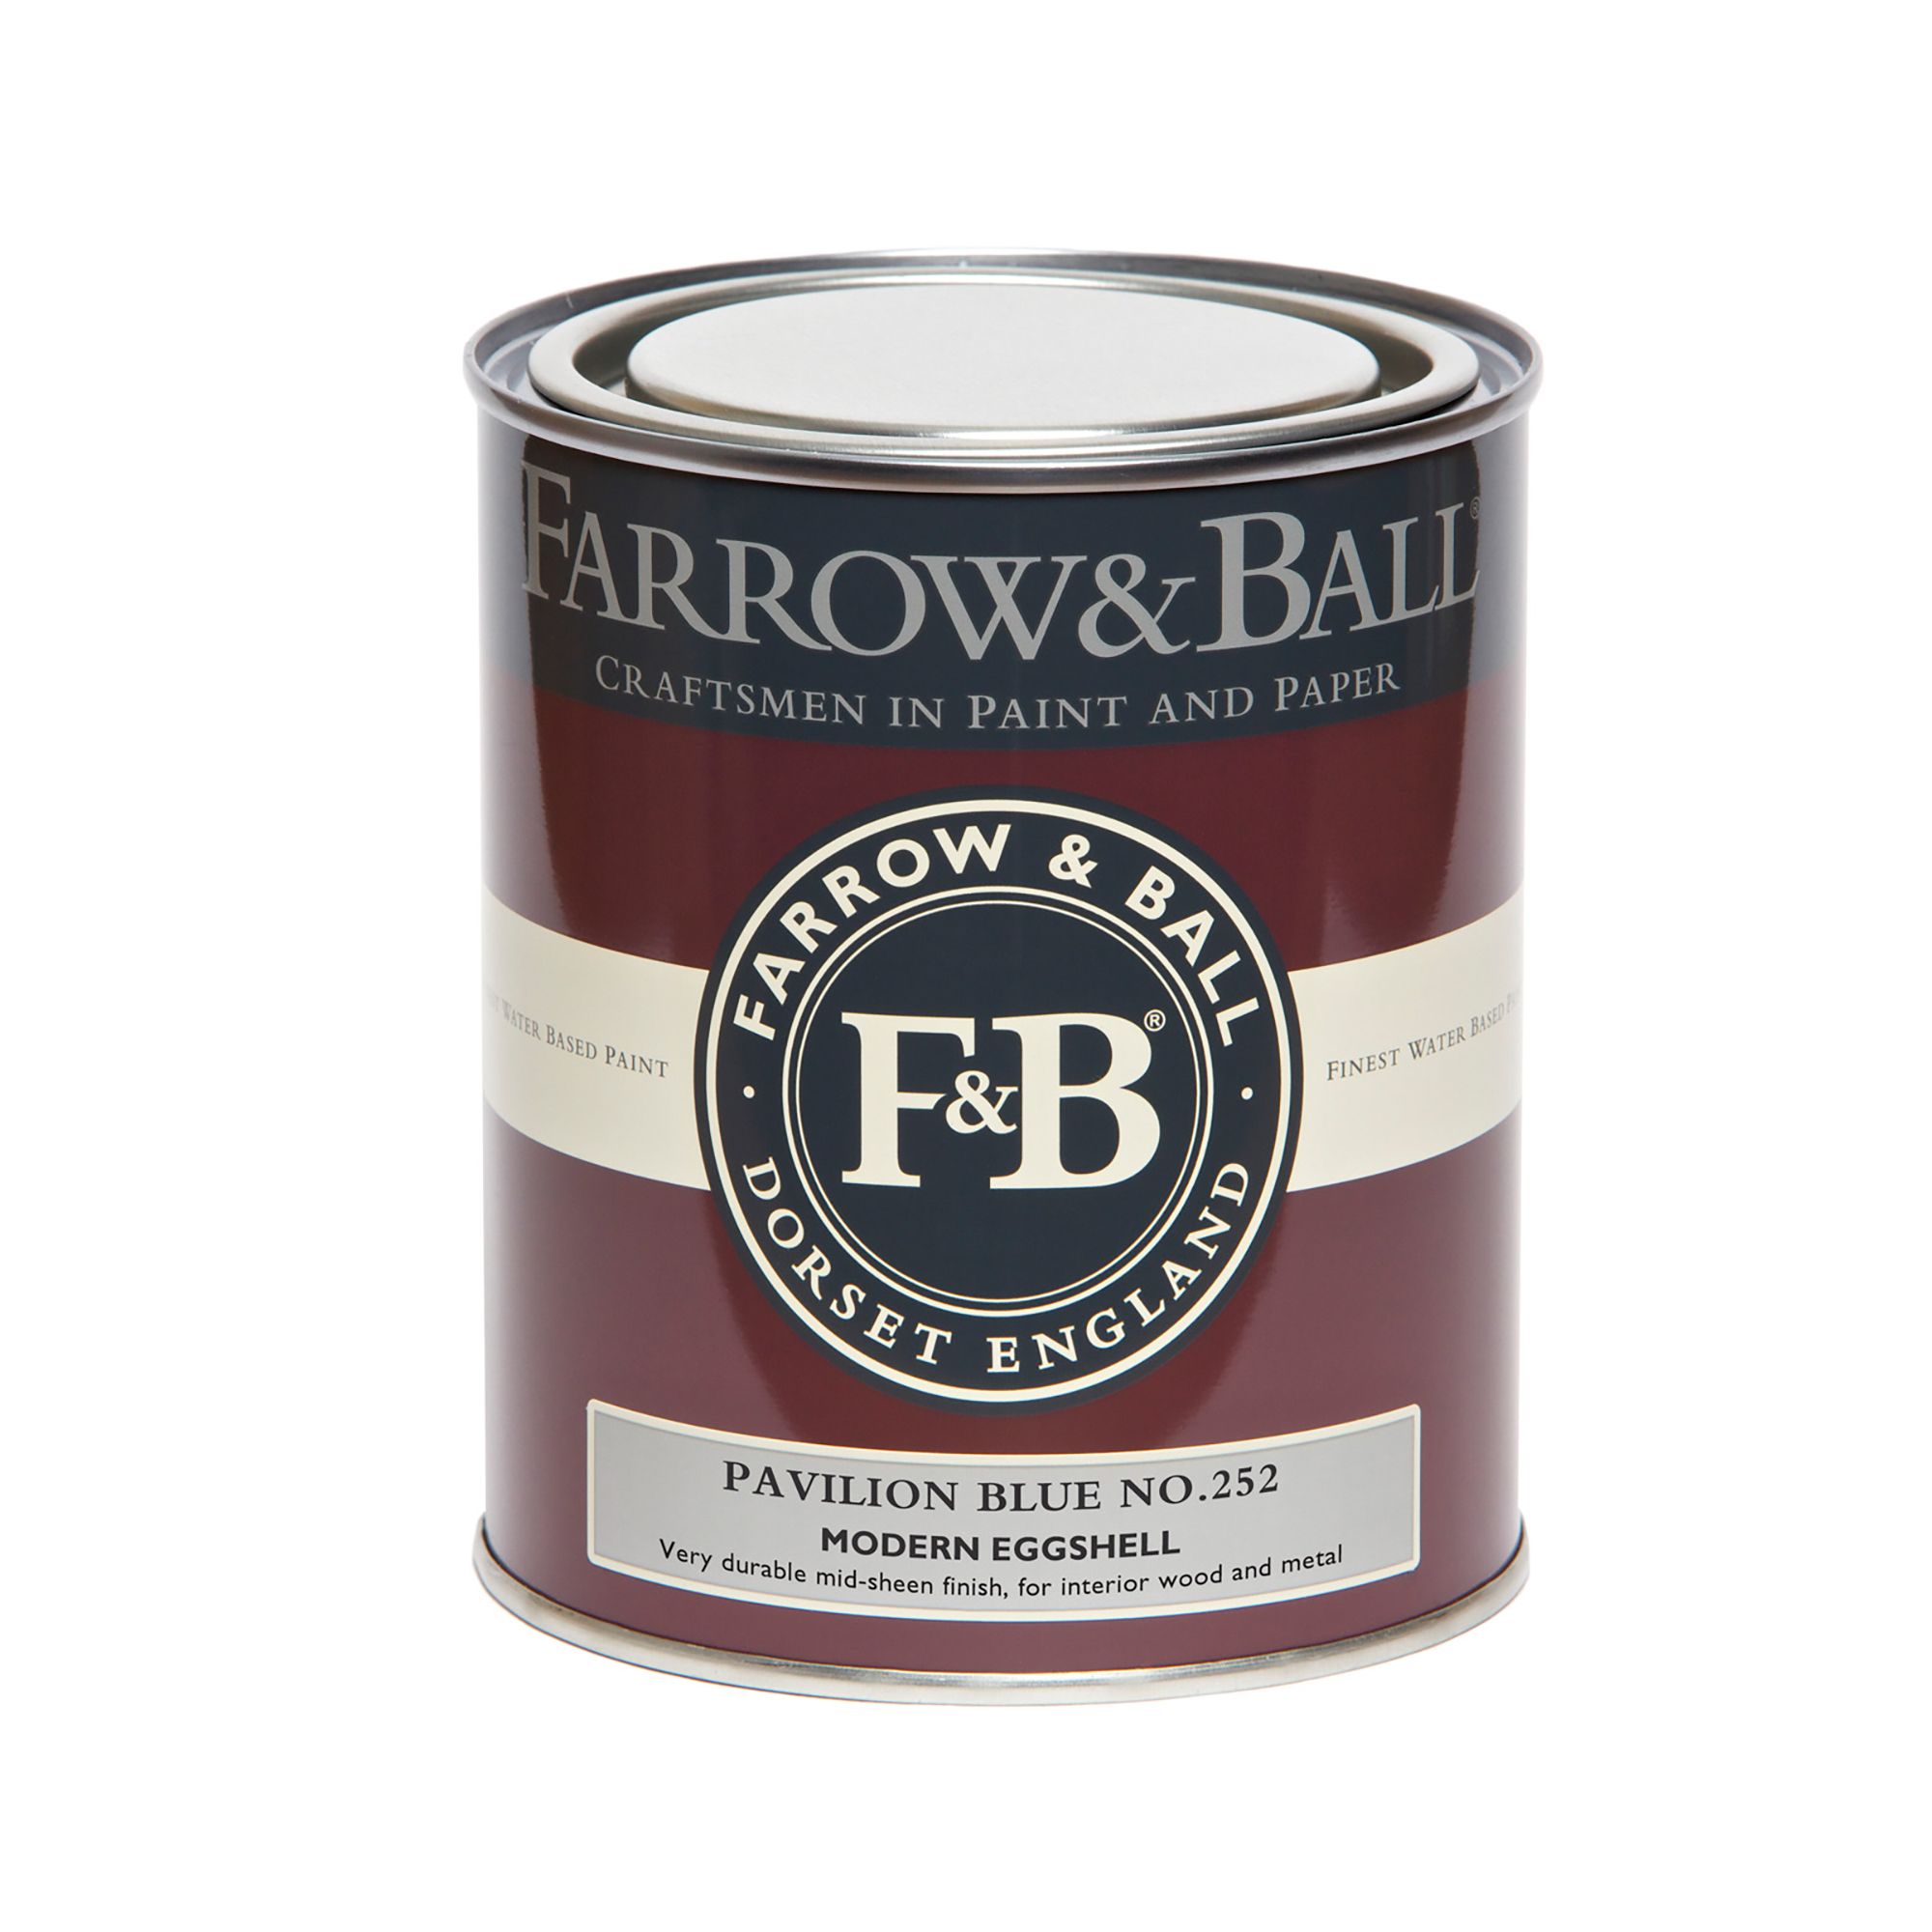 Farrow & Ball Modern Pavilion Blue No.252 Eggshell Paint, 750ml